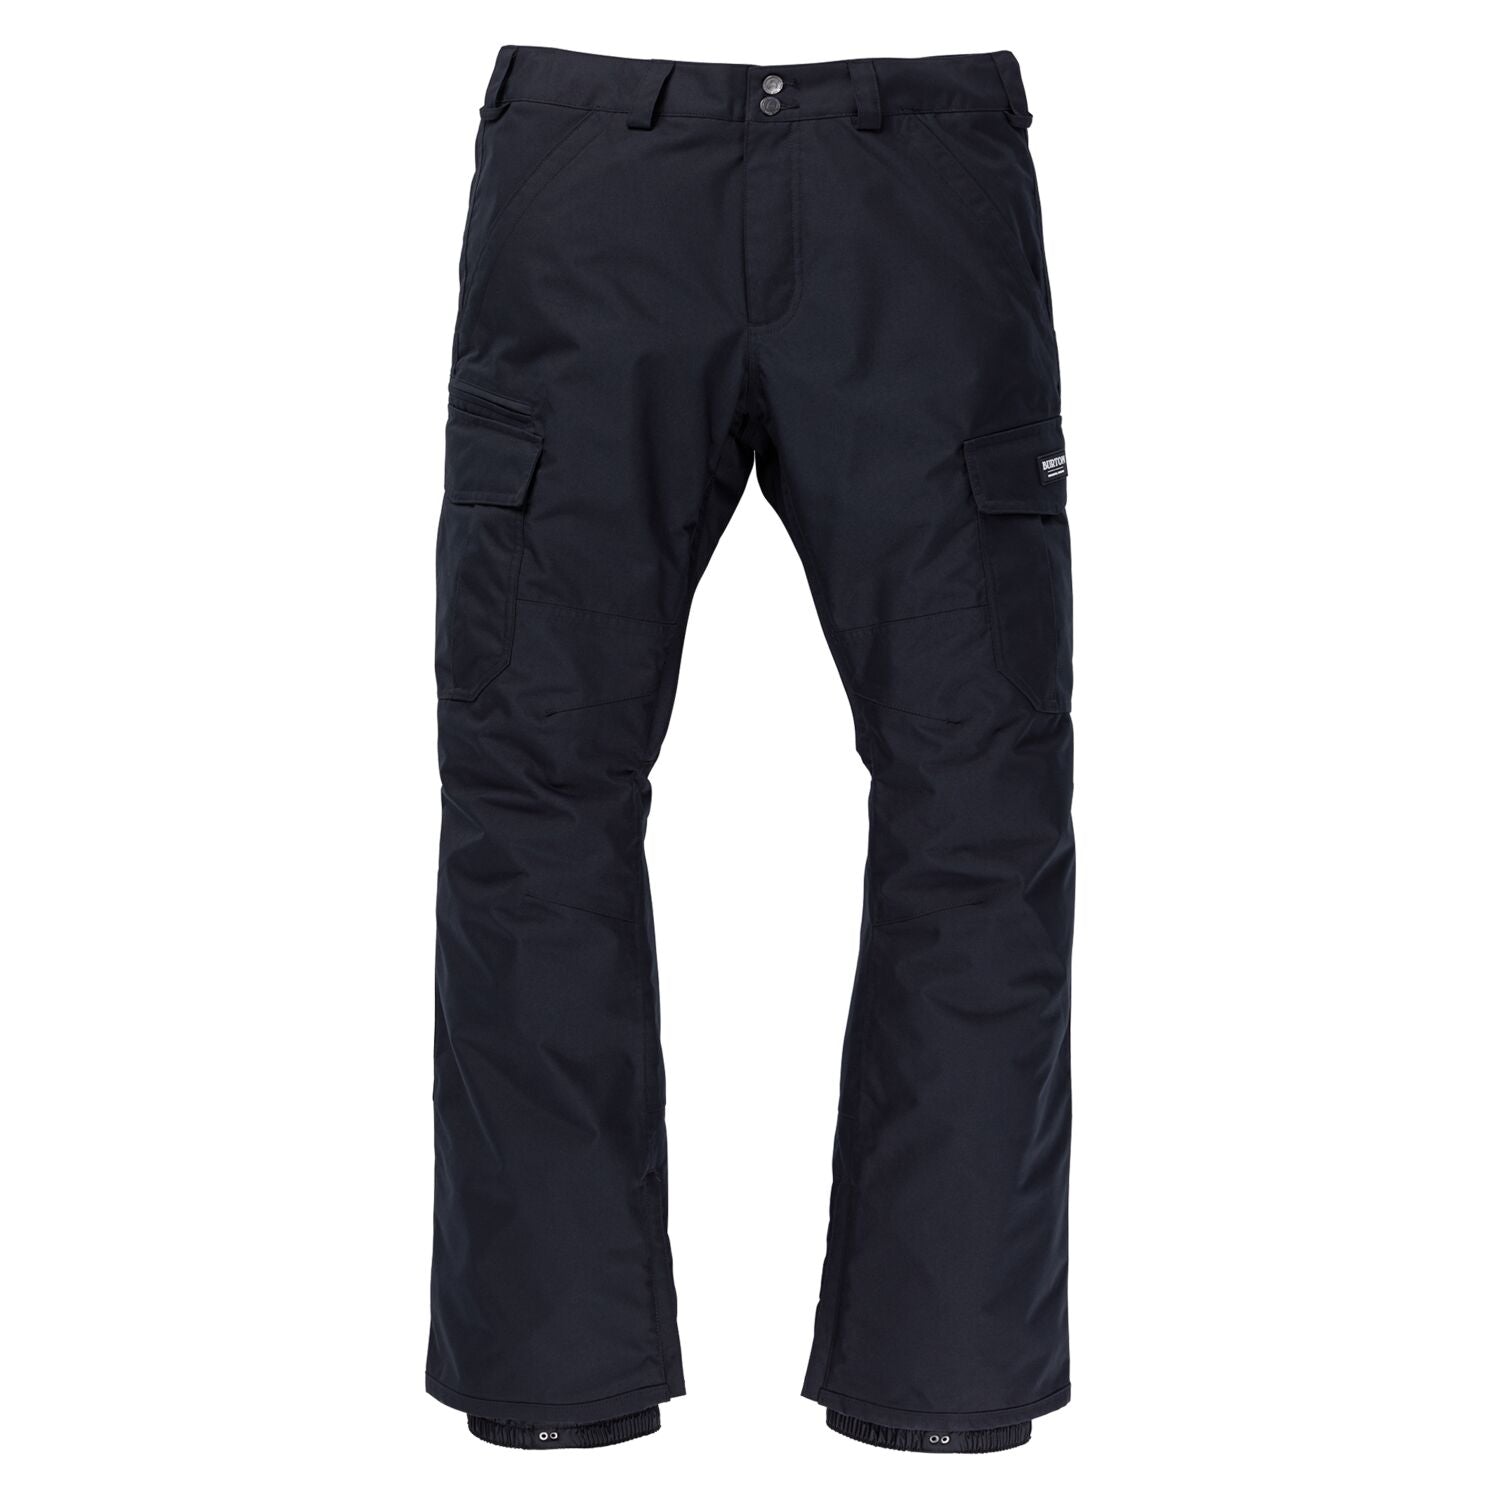 Men's Cargo Pants - Relaxed Fit - True Black